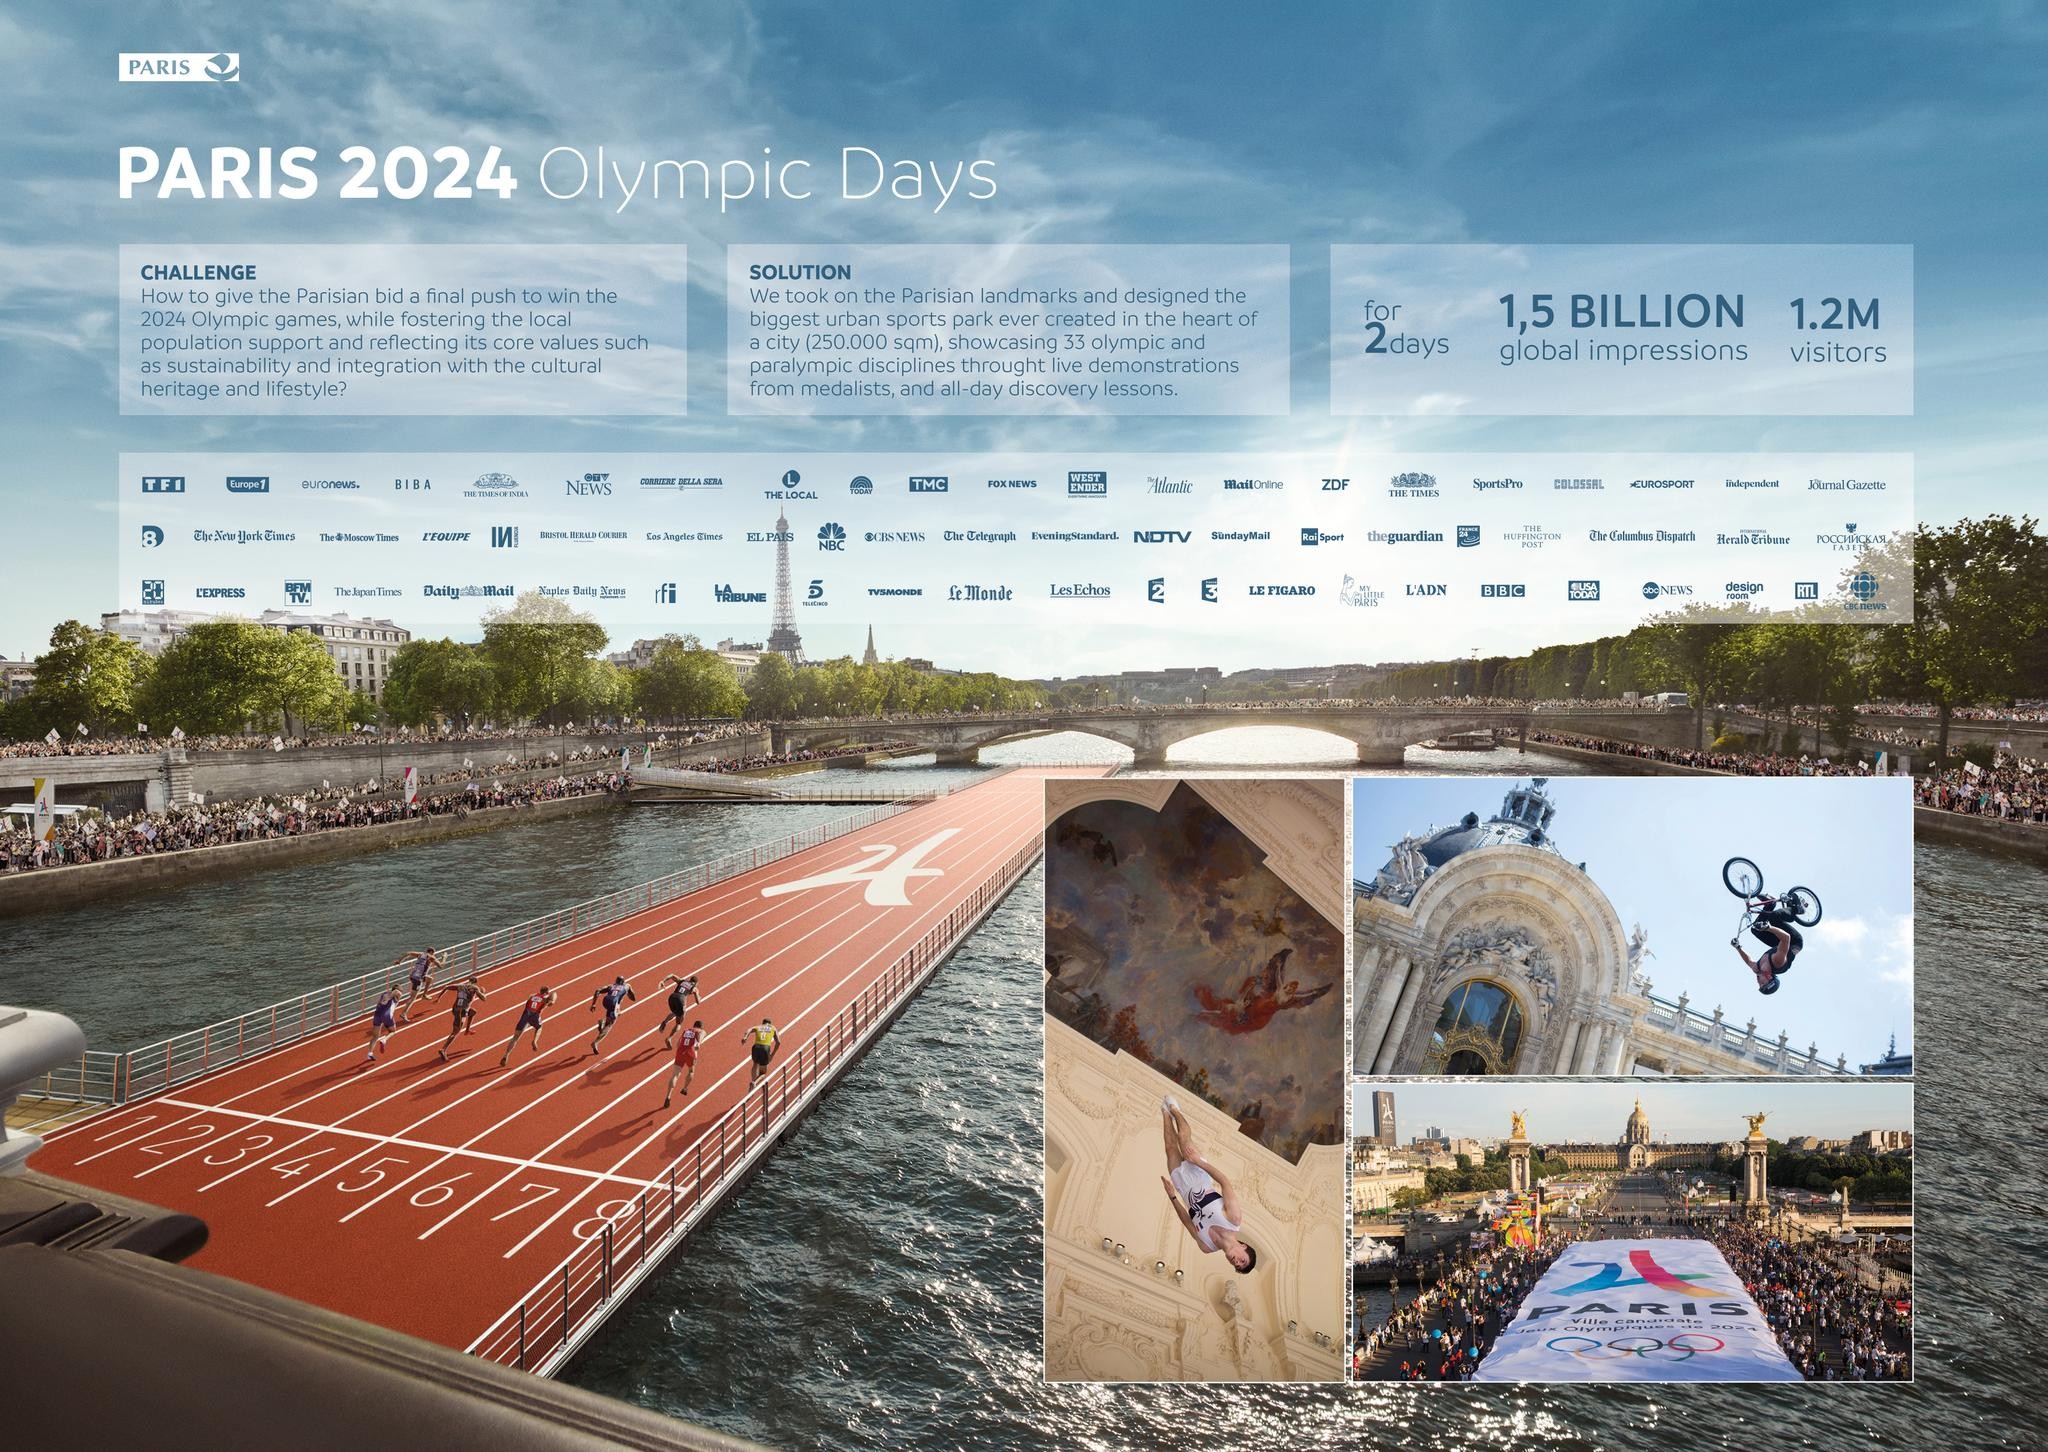 PARIS 2024 OLYMPIC DAYS